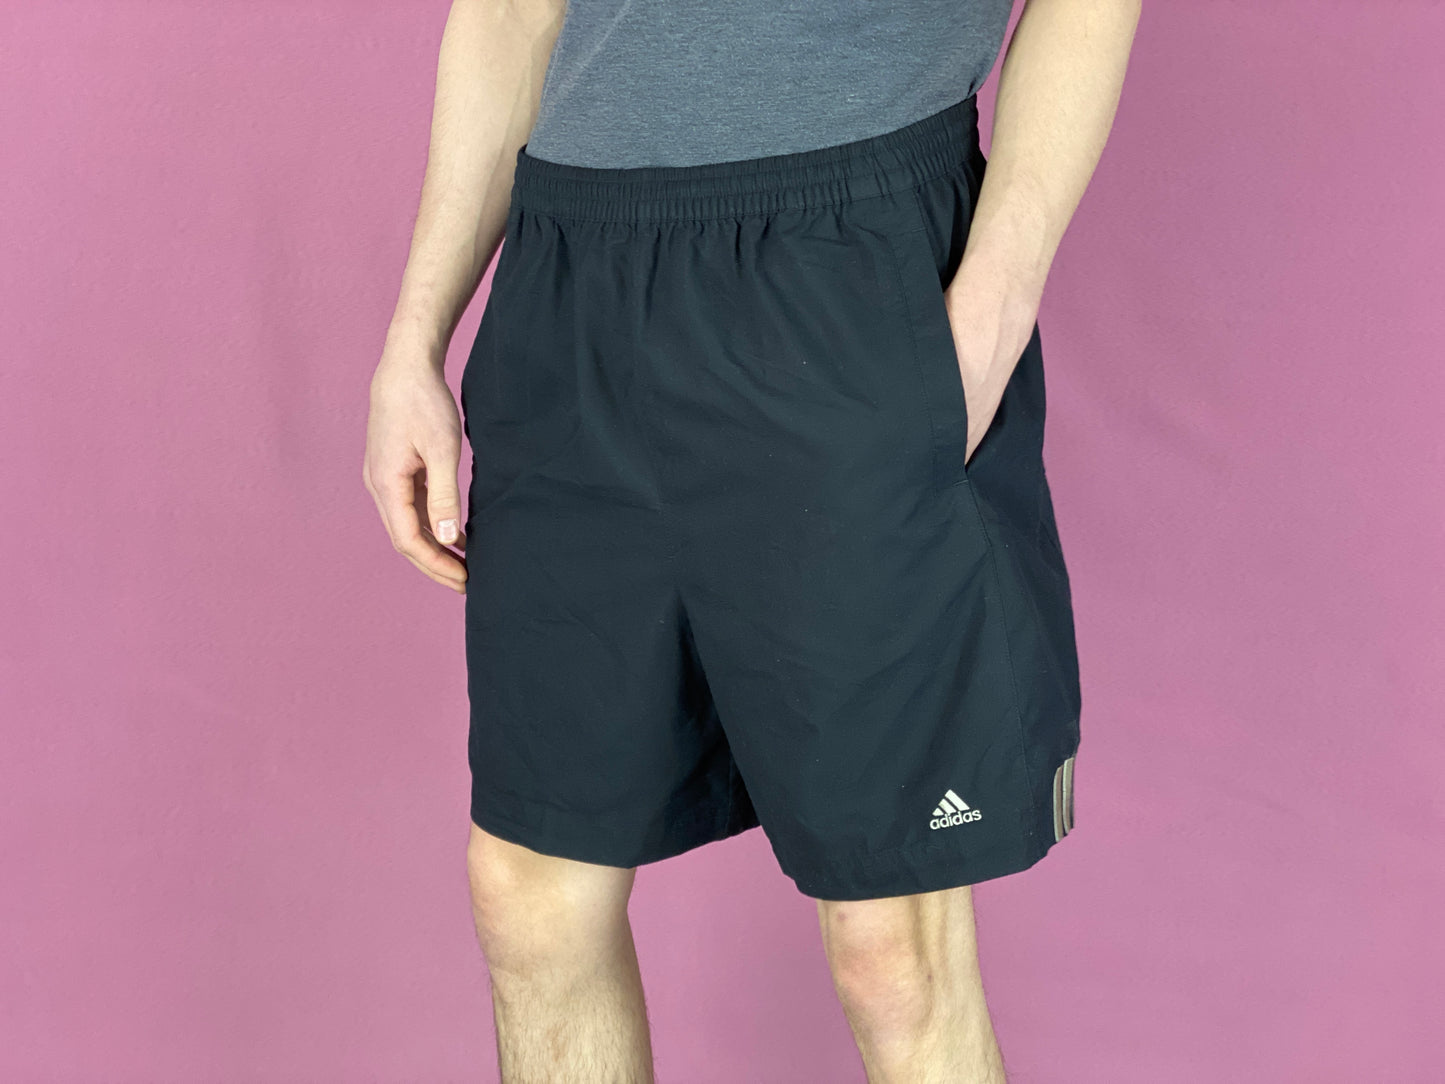 Adidas Vintage Men's Sport Shorts - Large Black Cotton Blend